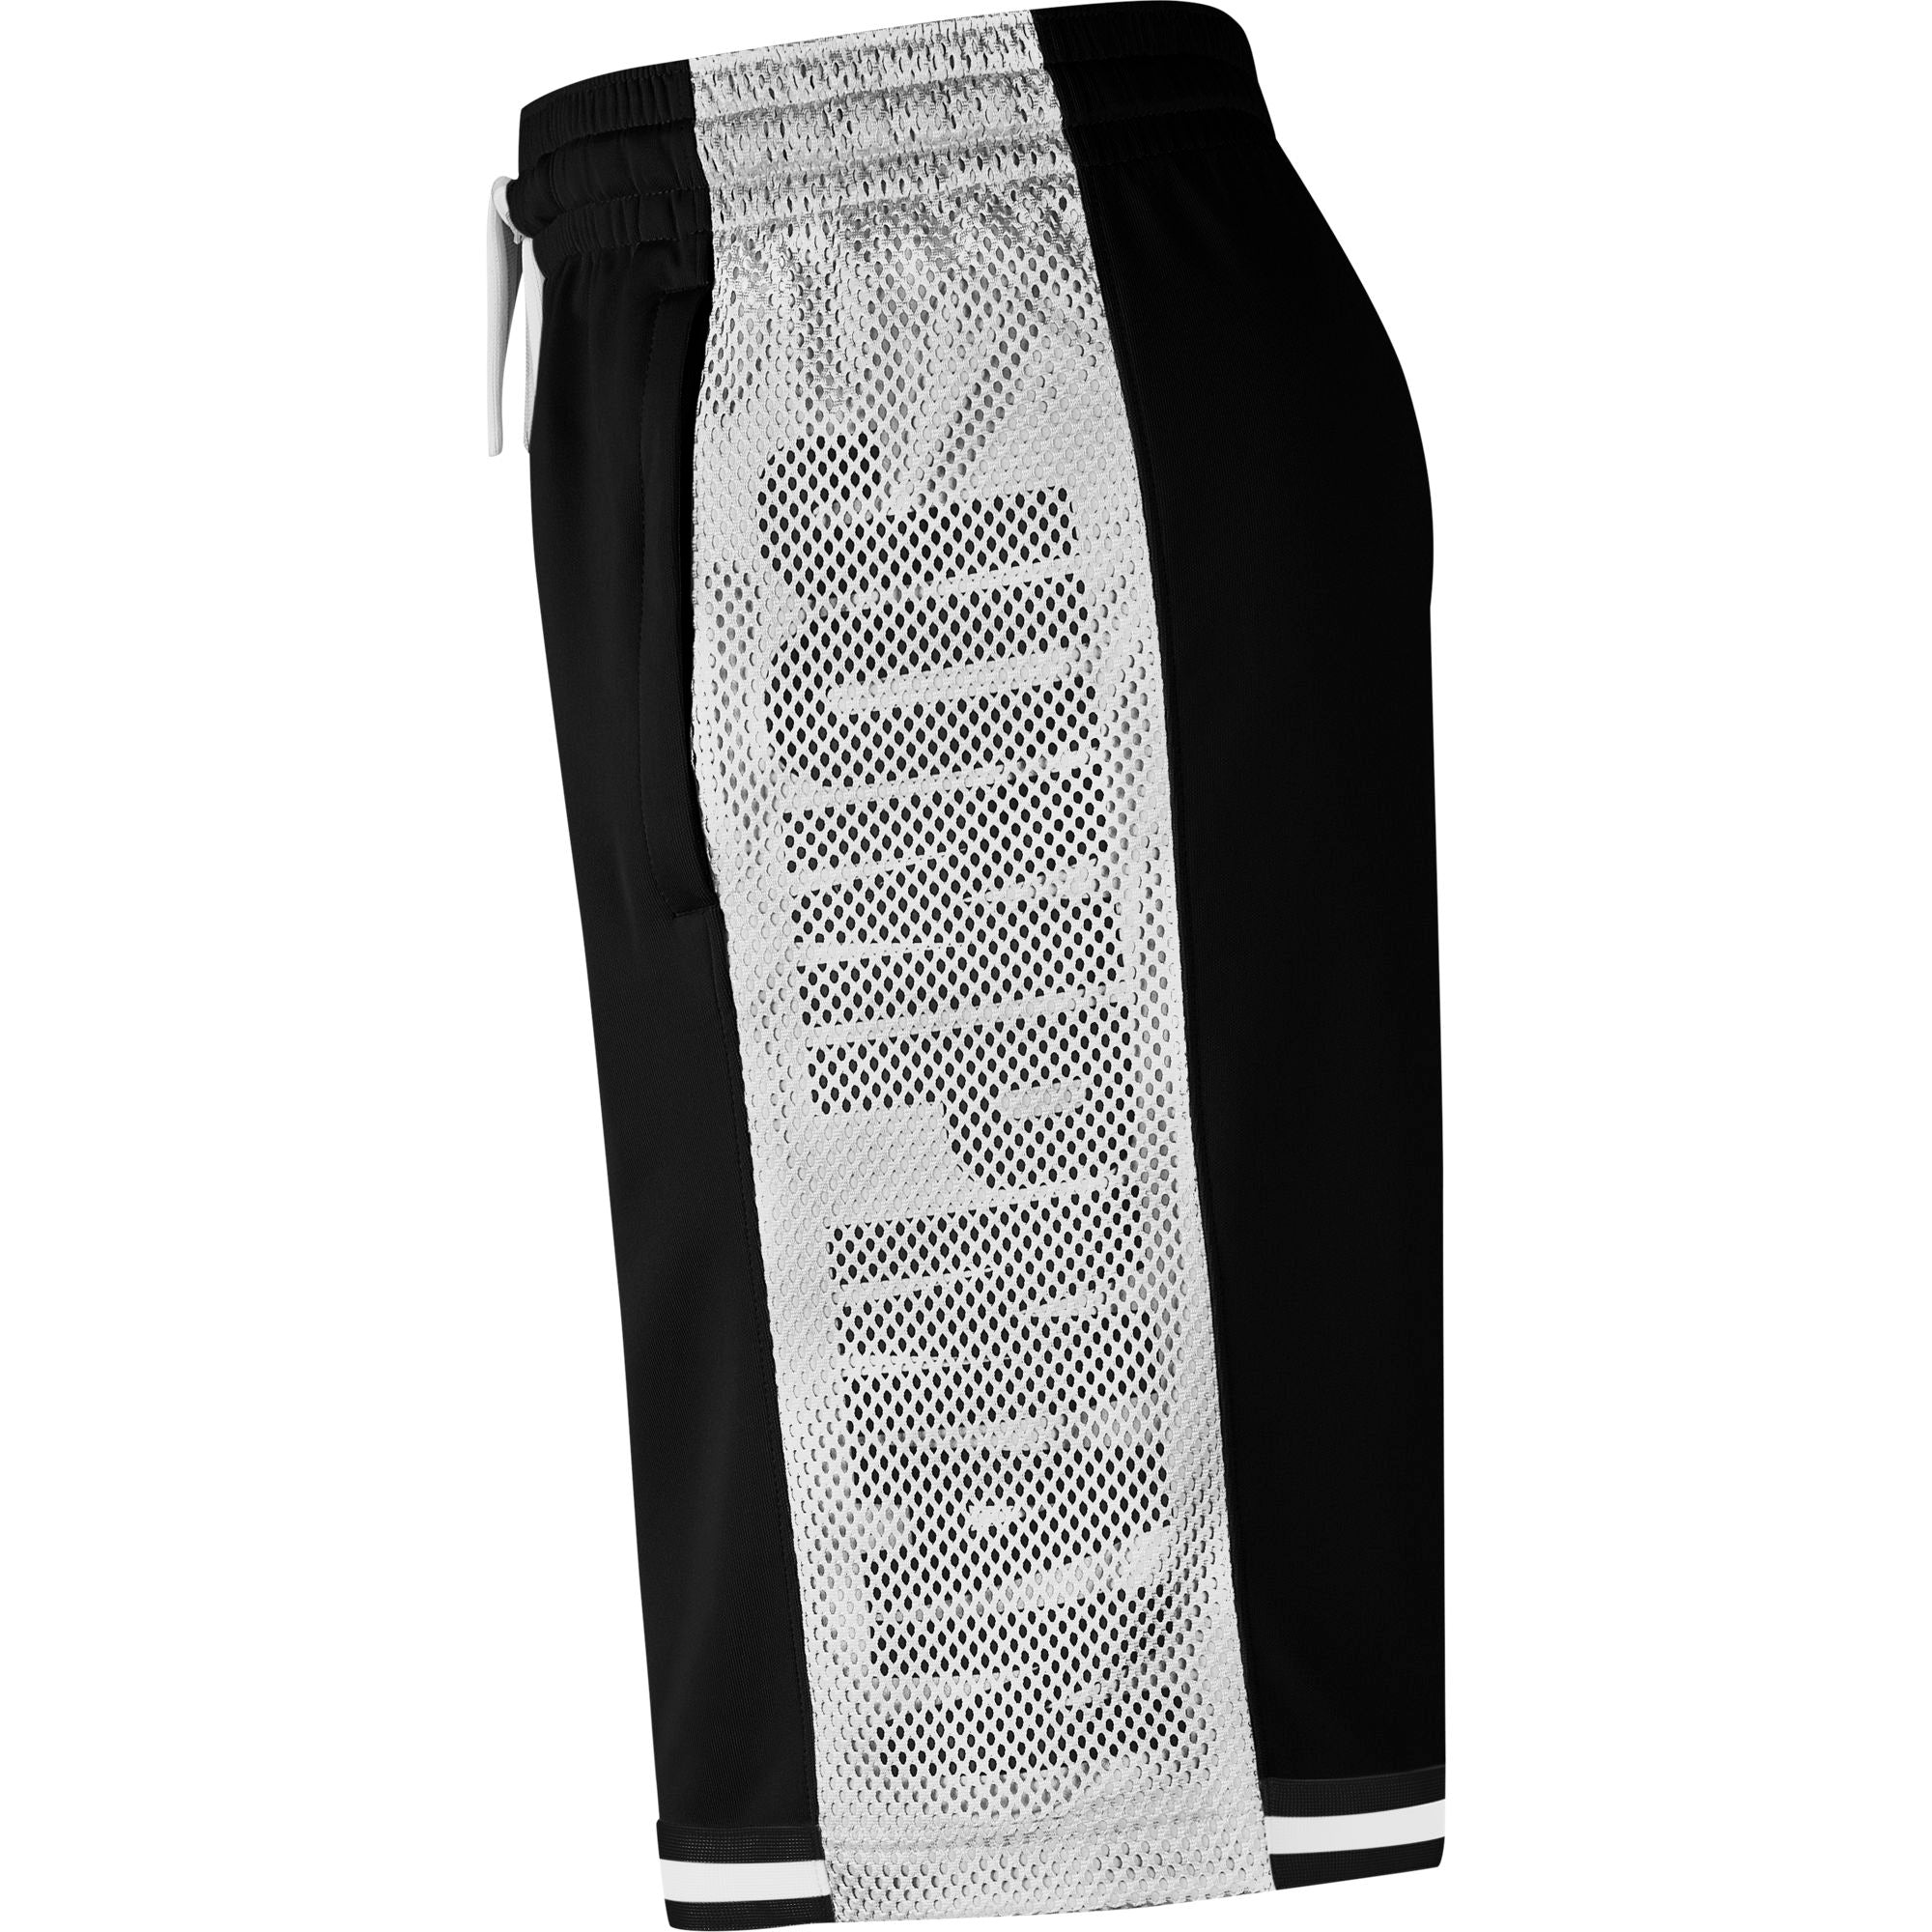 Nike Jordan Jumpman Basketball Shorts - Black/White